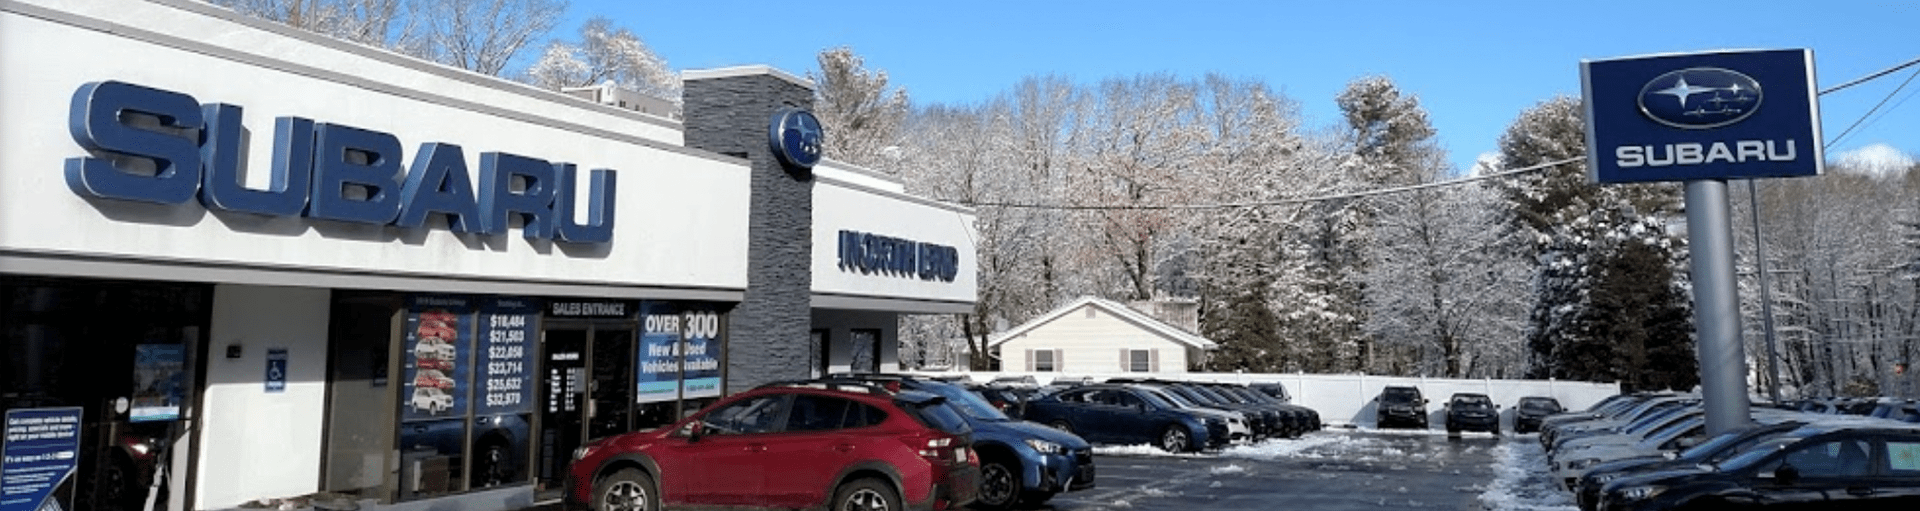 North End Subaru Service Center